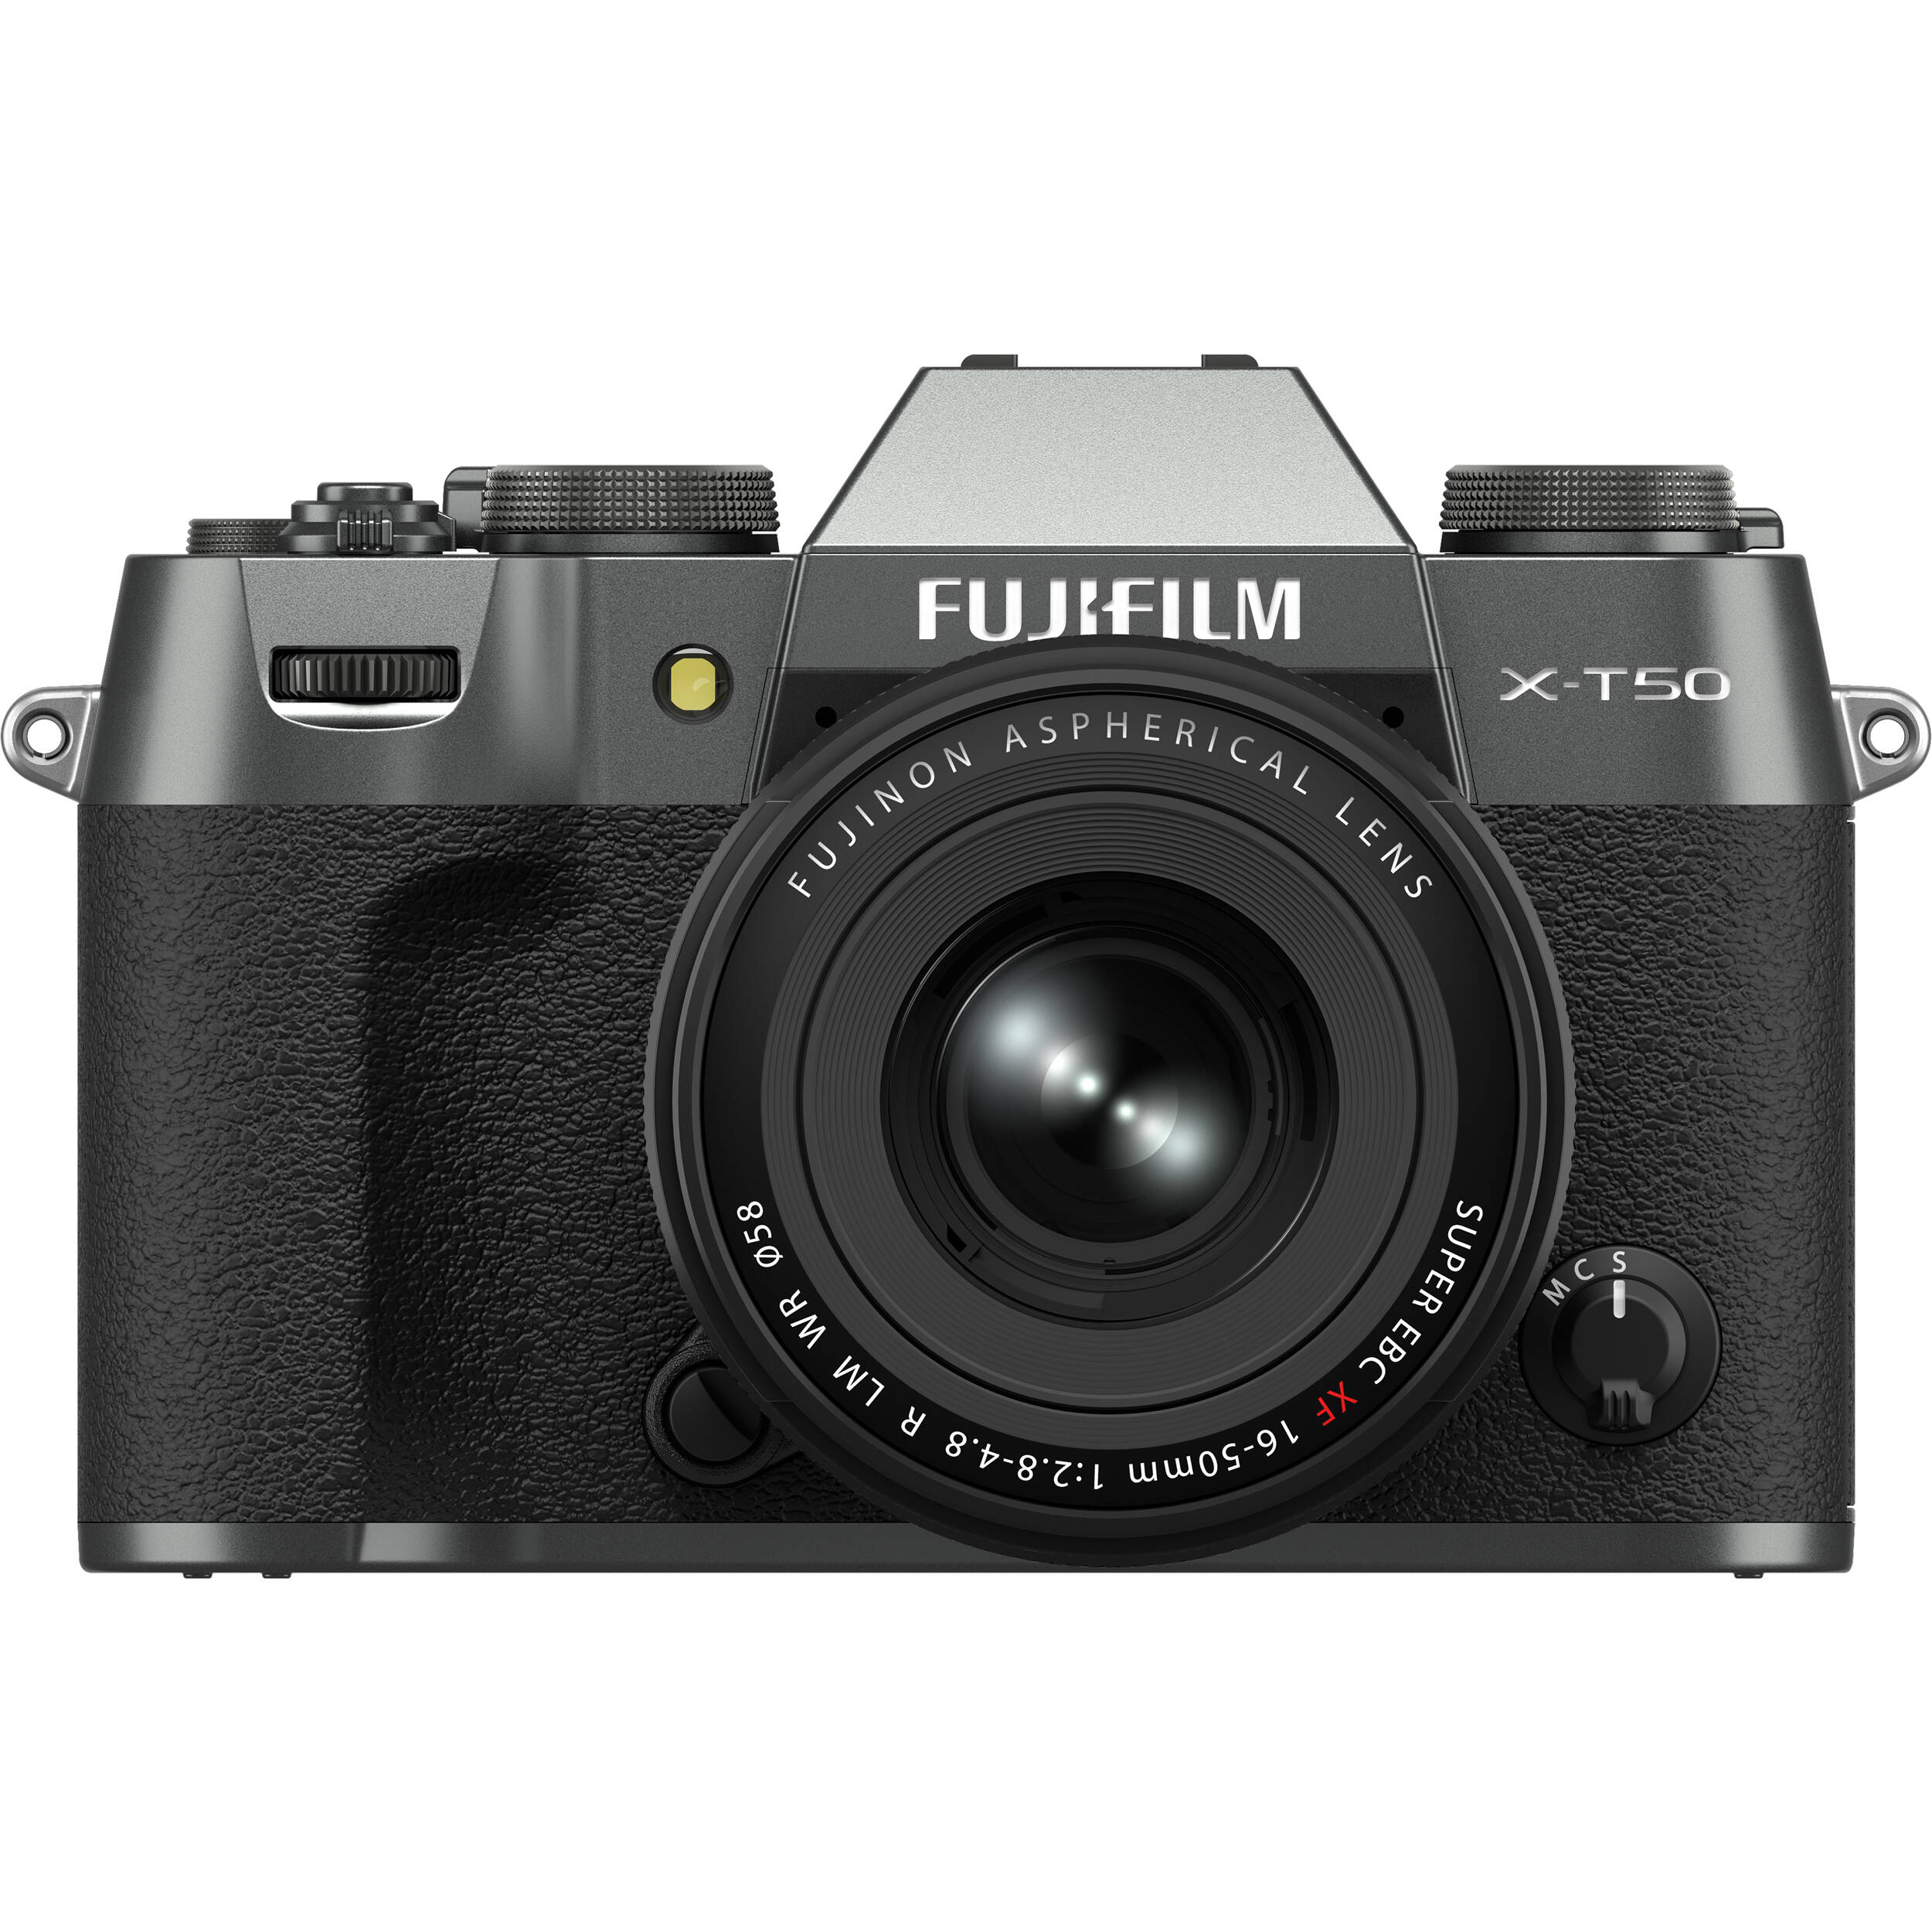 FUJIFILM X-T50 Mirrorless Camera with XF 16-50mm f/2.8-4.8 Lens 